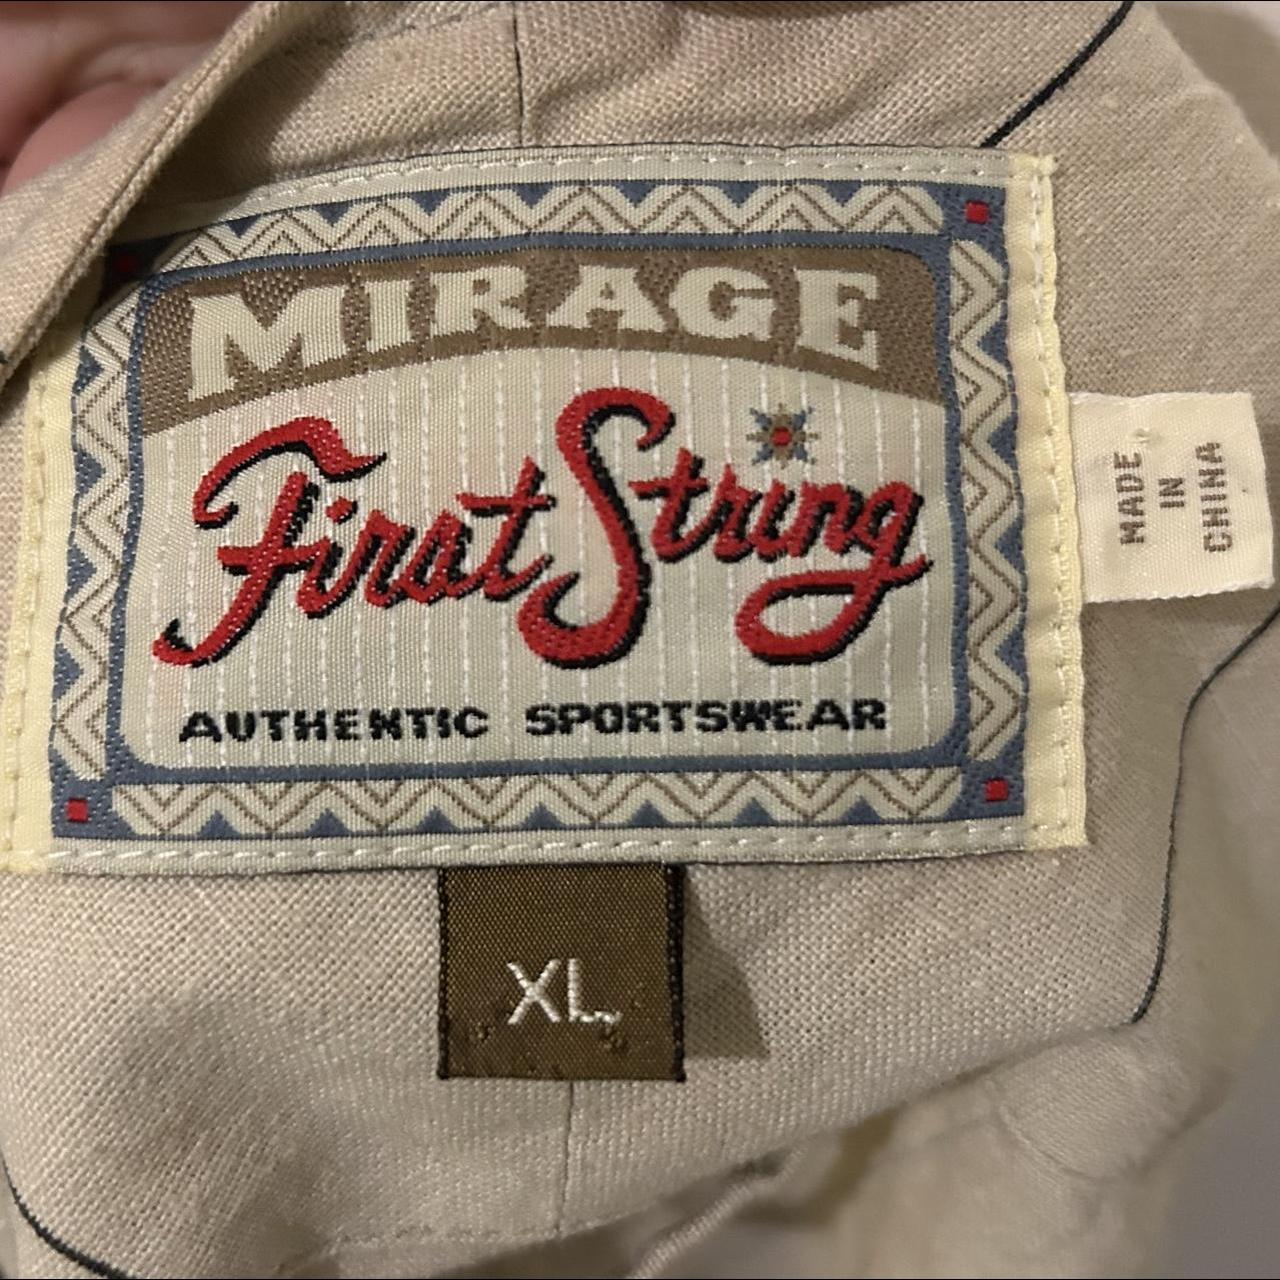 Mirage First String Chicago White Sox Vintage Jersey Mens XL Black